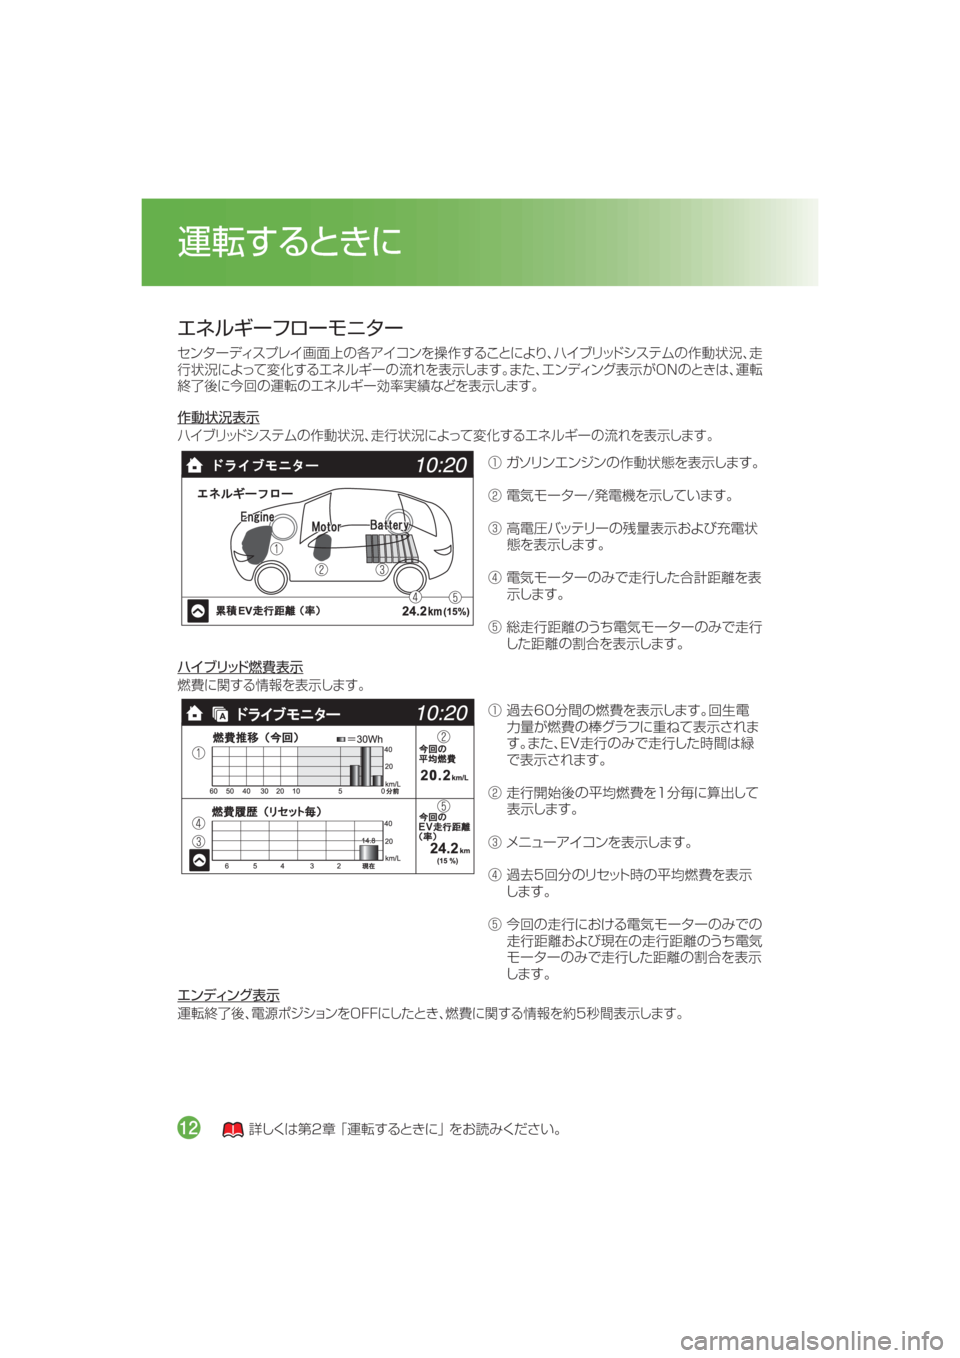 MAZDA MODEL AXELA HYBRID 2014  アクセラハイブリッド｜取扱説明書 (in Japanese) ¤Éçª”Ñé”ÞÇ»”
